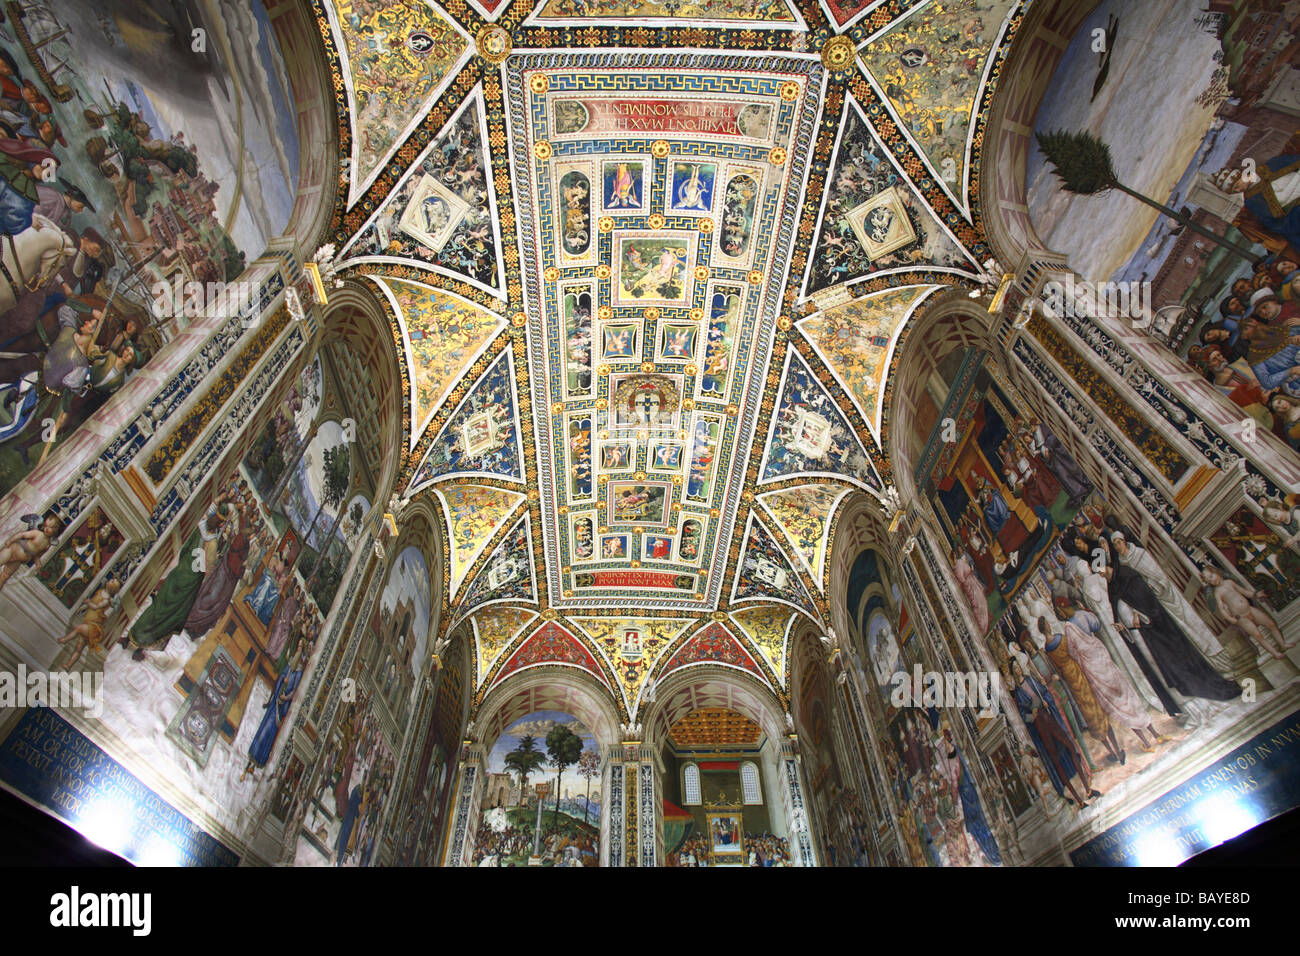 Pinturicchio's frescoes in the Piccolomini Library of the Duomo in Siena, Italy Stock Photo